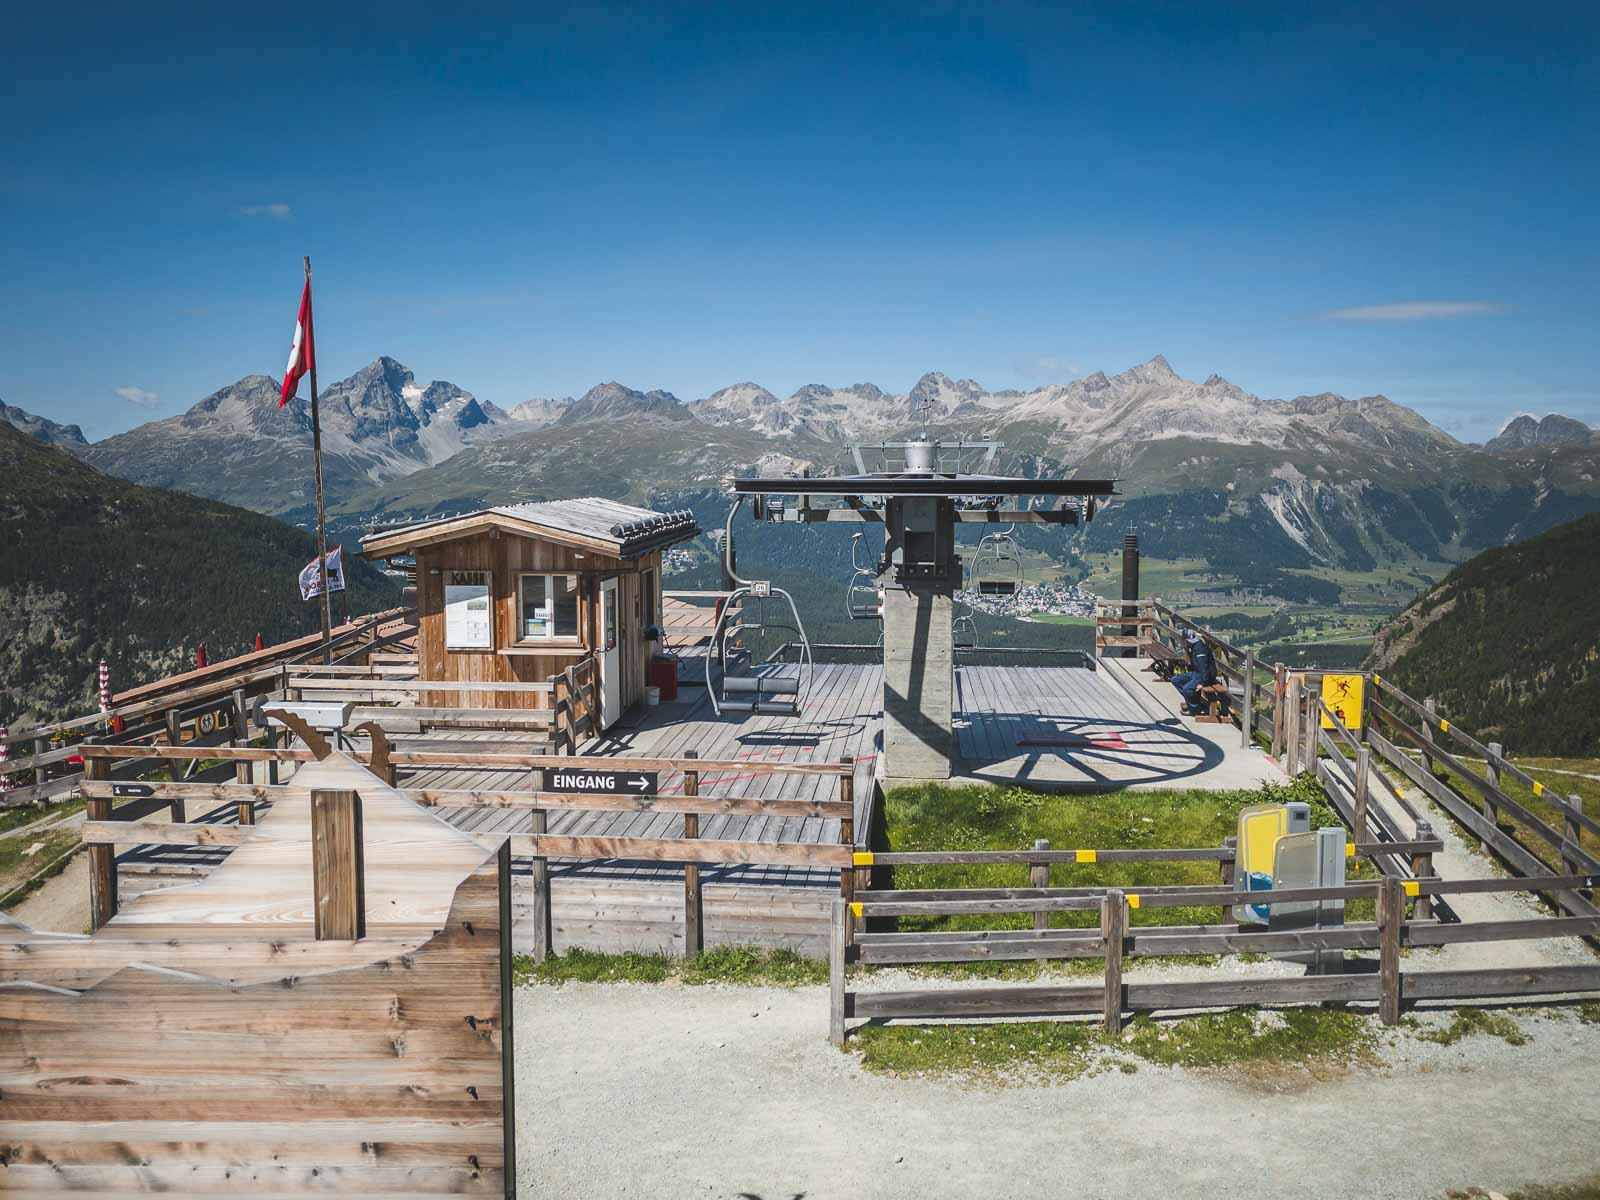 Alp Languard in St. Moritz Switzerland